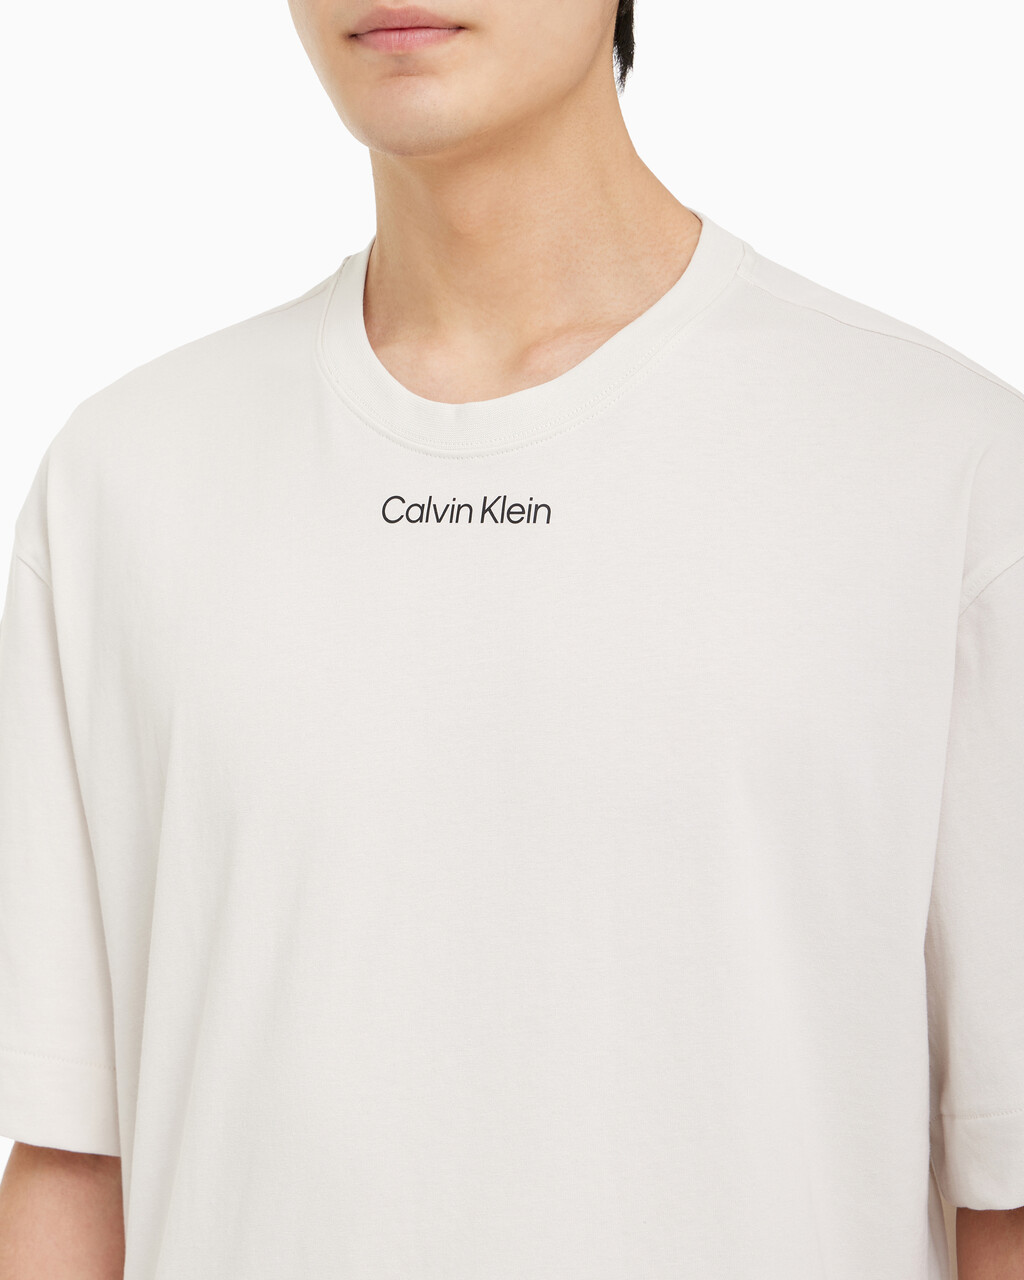 Buy 남성 CK 애슬레틱 릴렉스 핏 반팔 티셔츠 in color WHITE